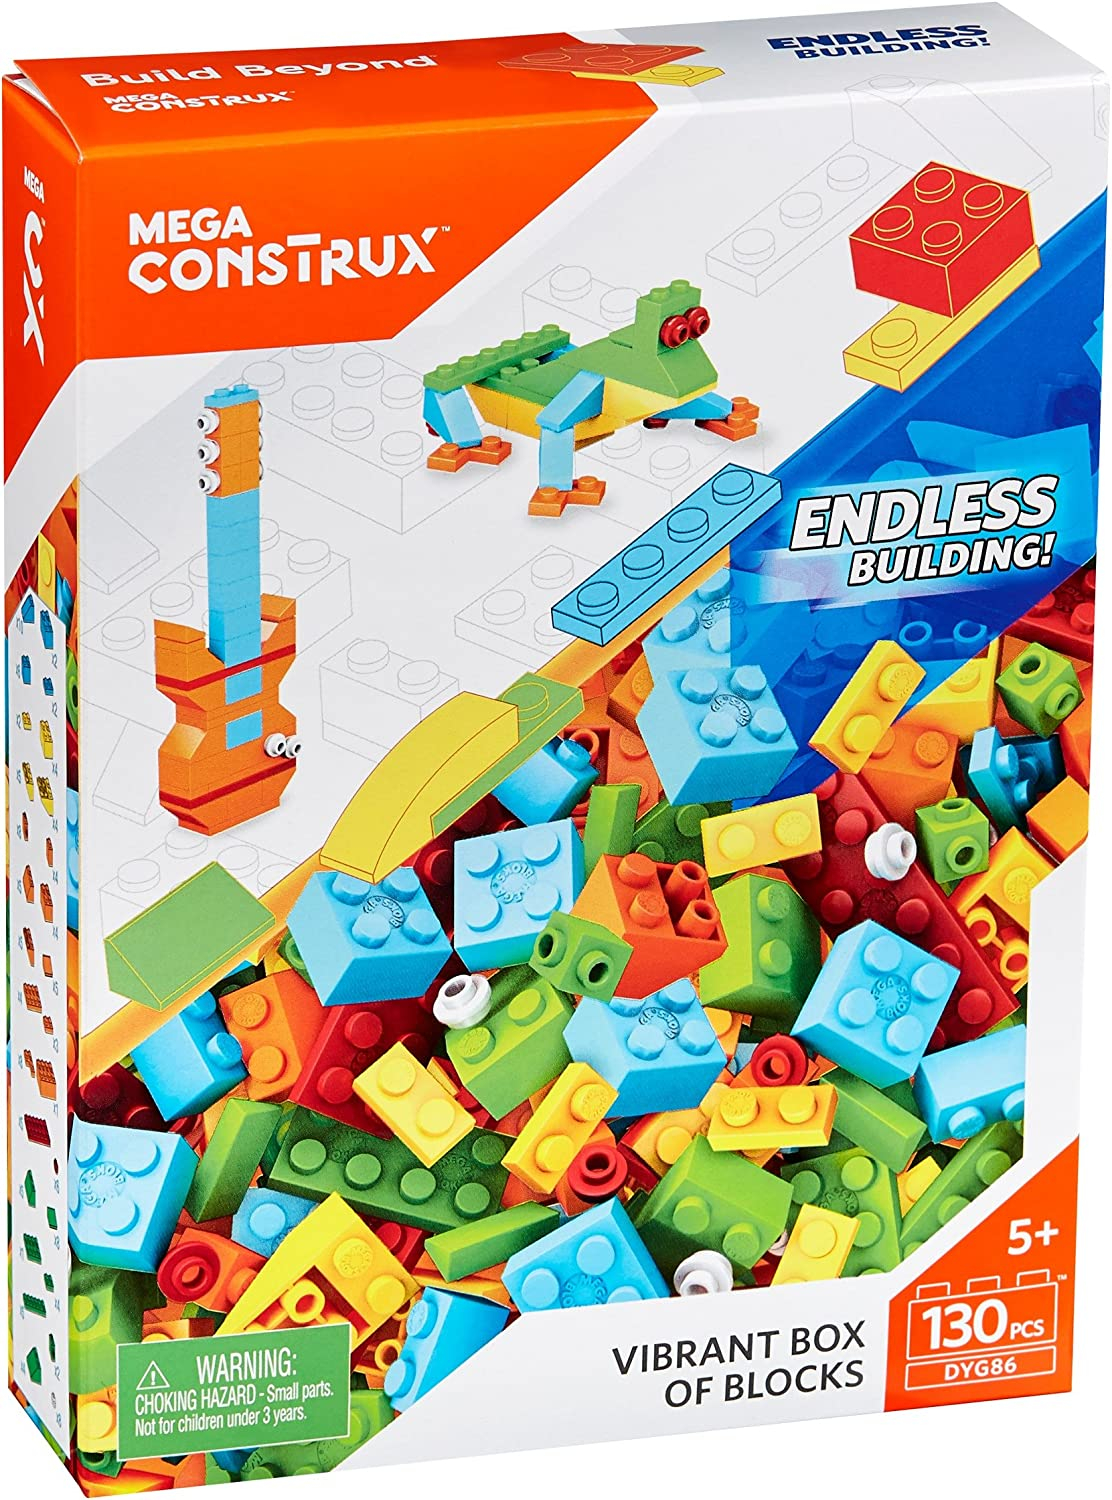 Mattel Mega Construx stredný box kociek DYG86 130 ks